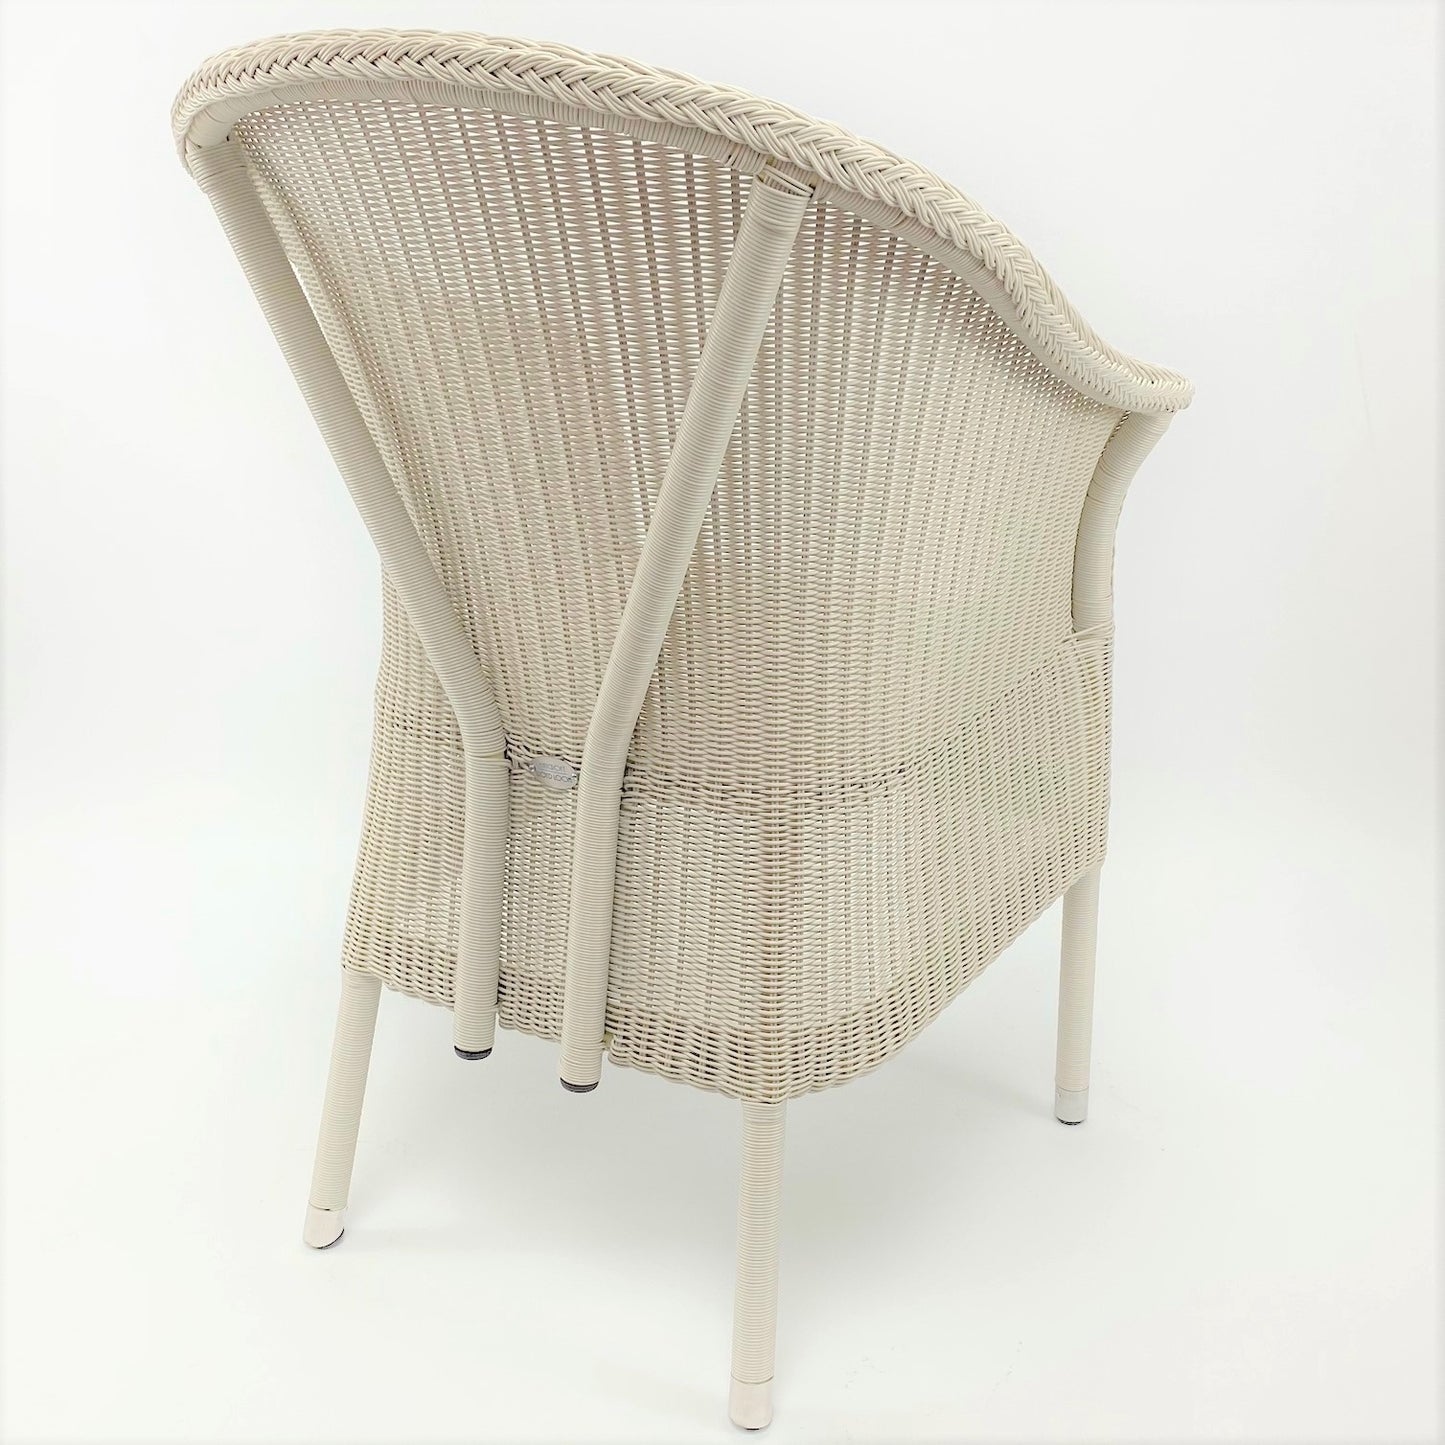 Beverley Outdoor Lloyd Loom Chair -Whitewash